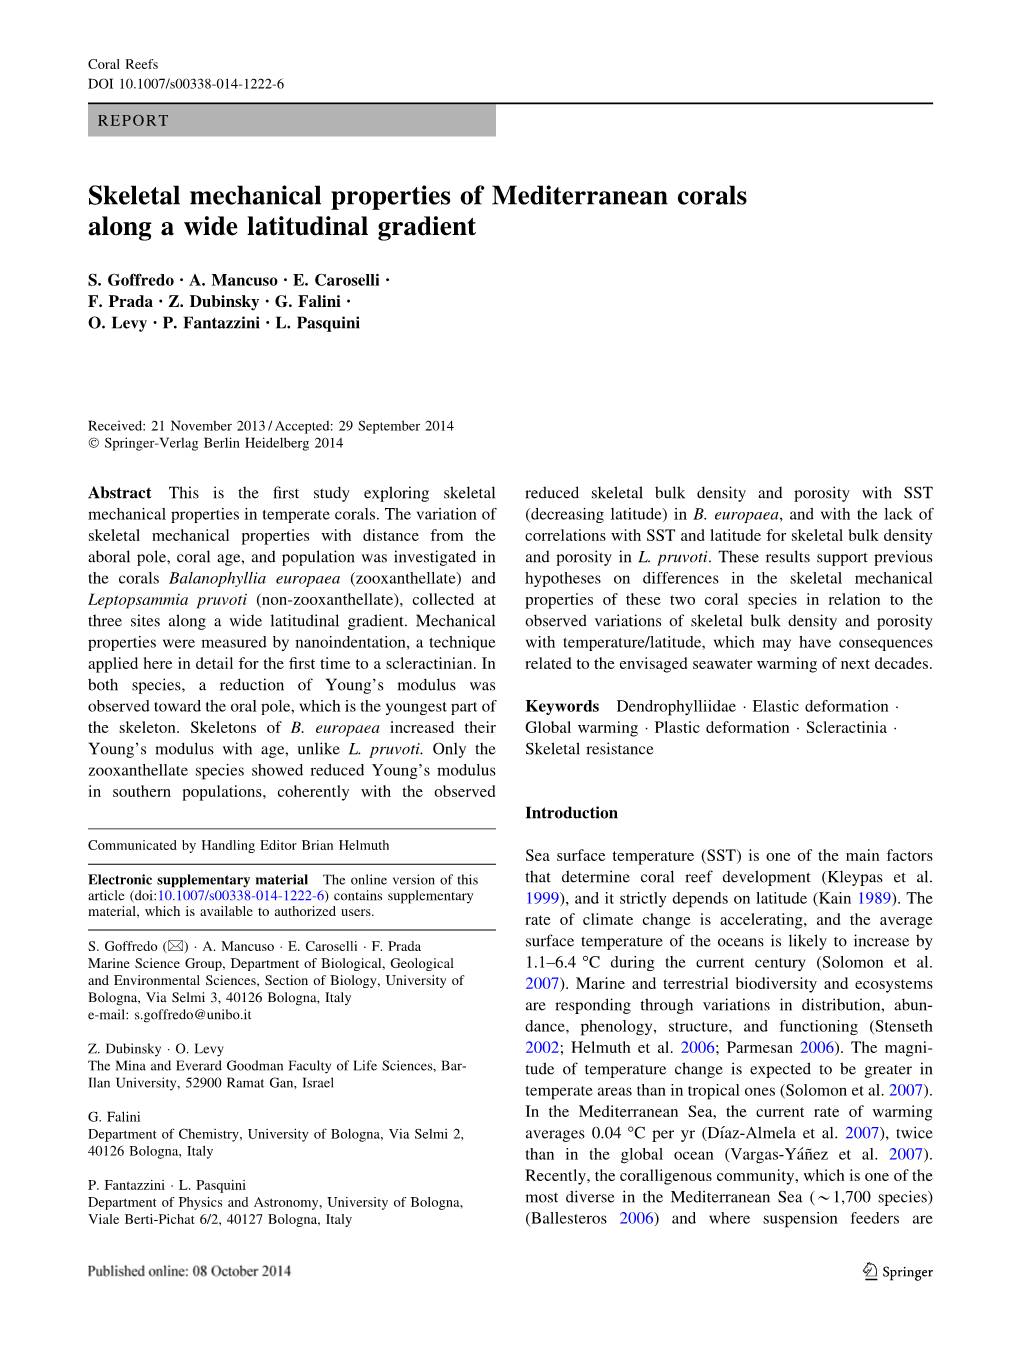 Skeletal Mechanical Properties of Mediterranean Corals Along a Wide Latitudinal Gradient